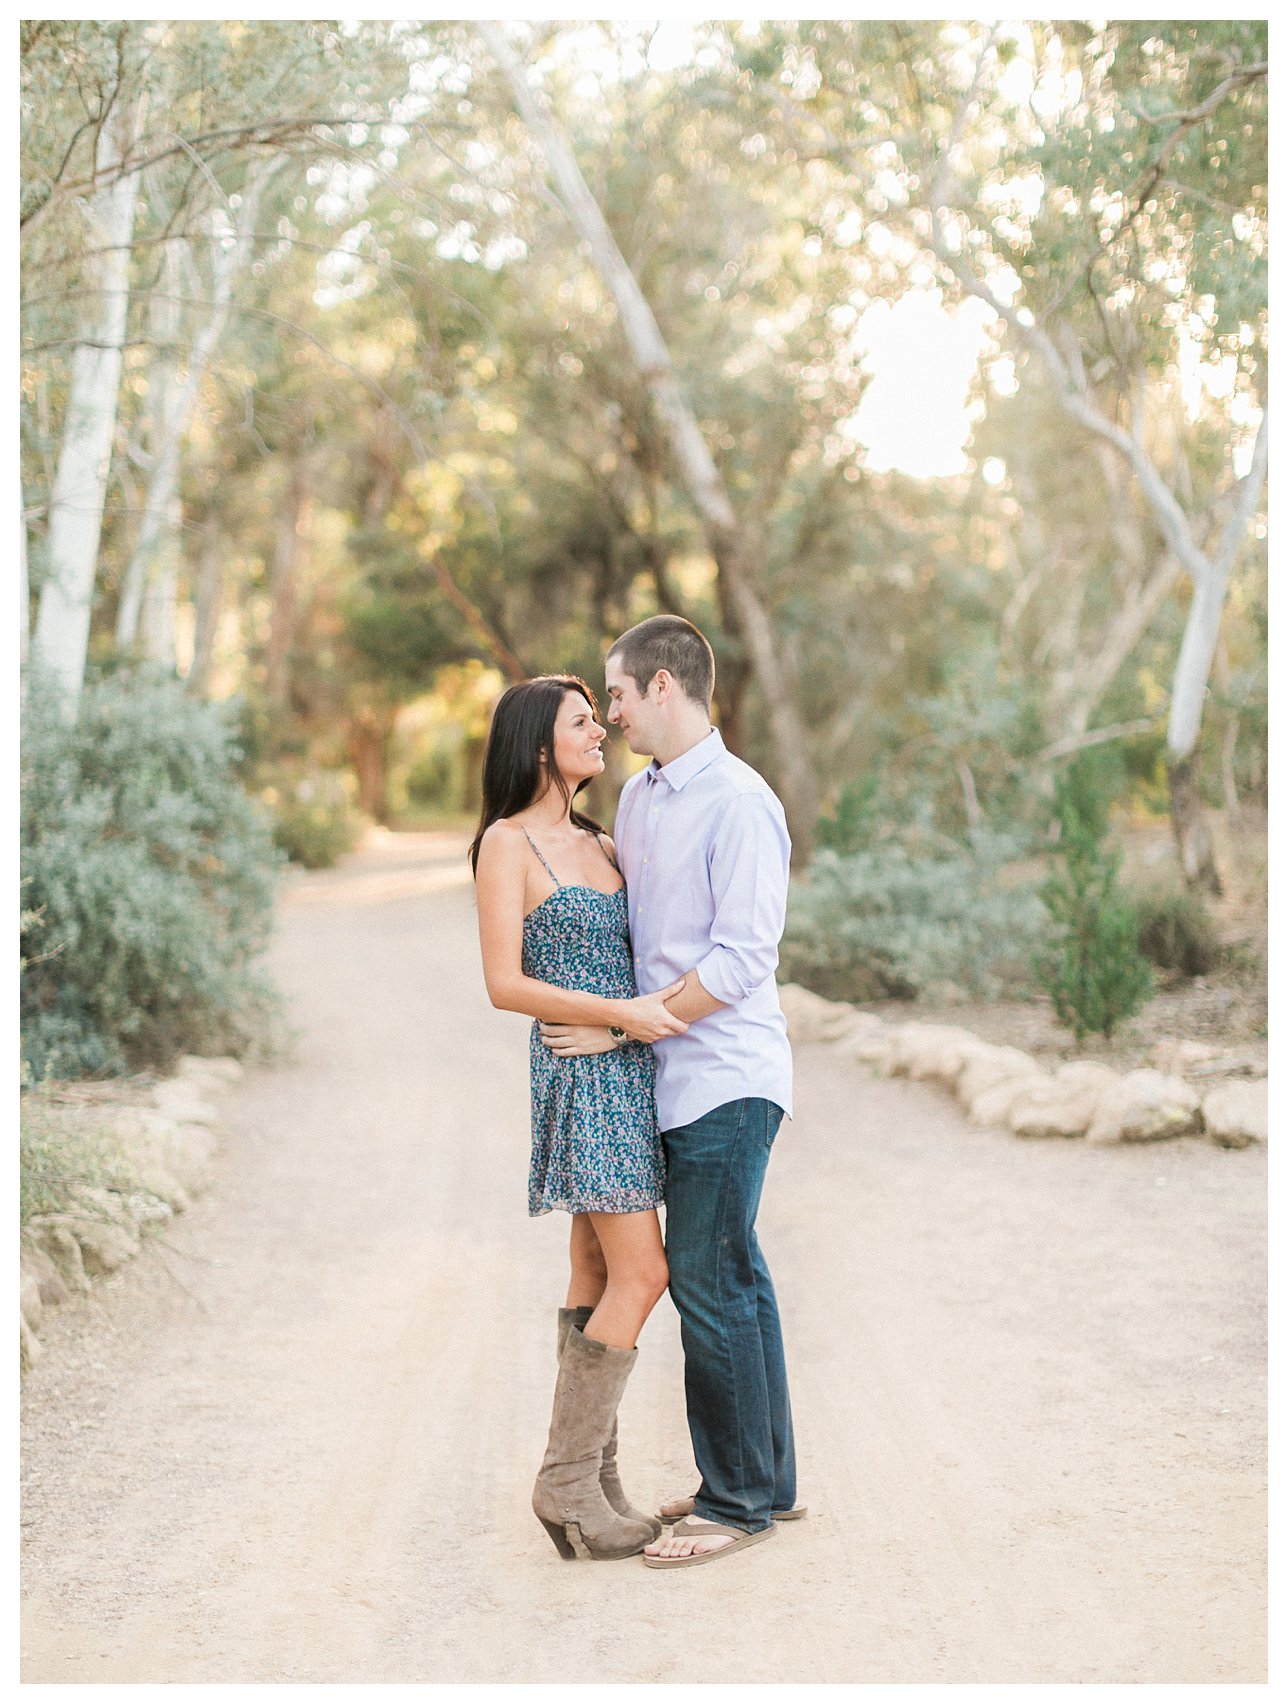 Boyce Thompson Arboretum engagement photos - Scottsdale Wedding Photographer | Rachel Solomon Photography_4699